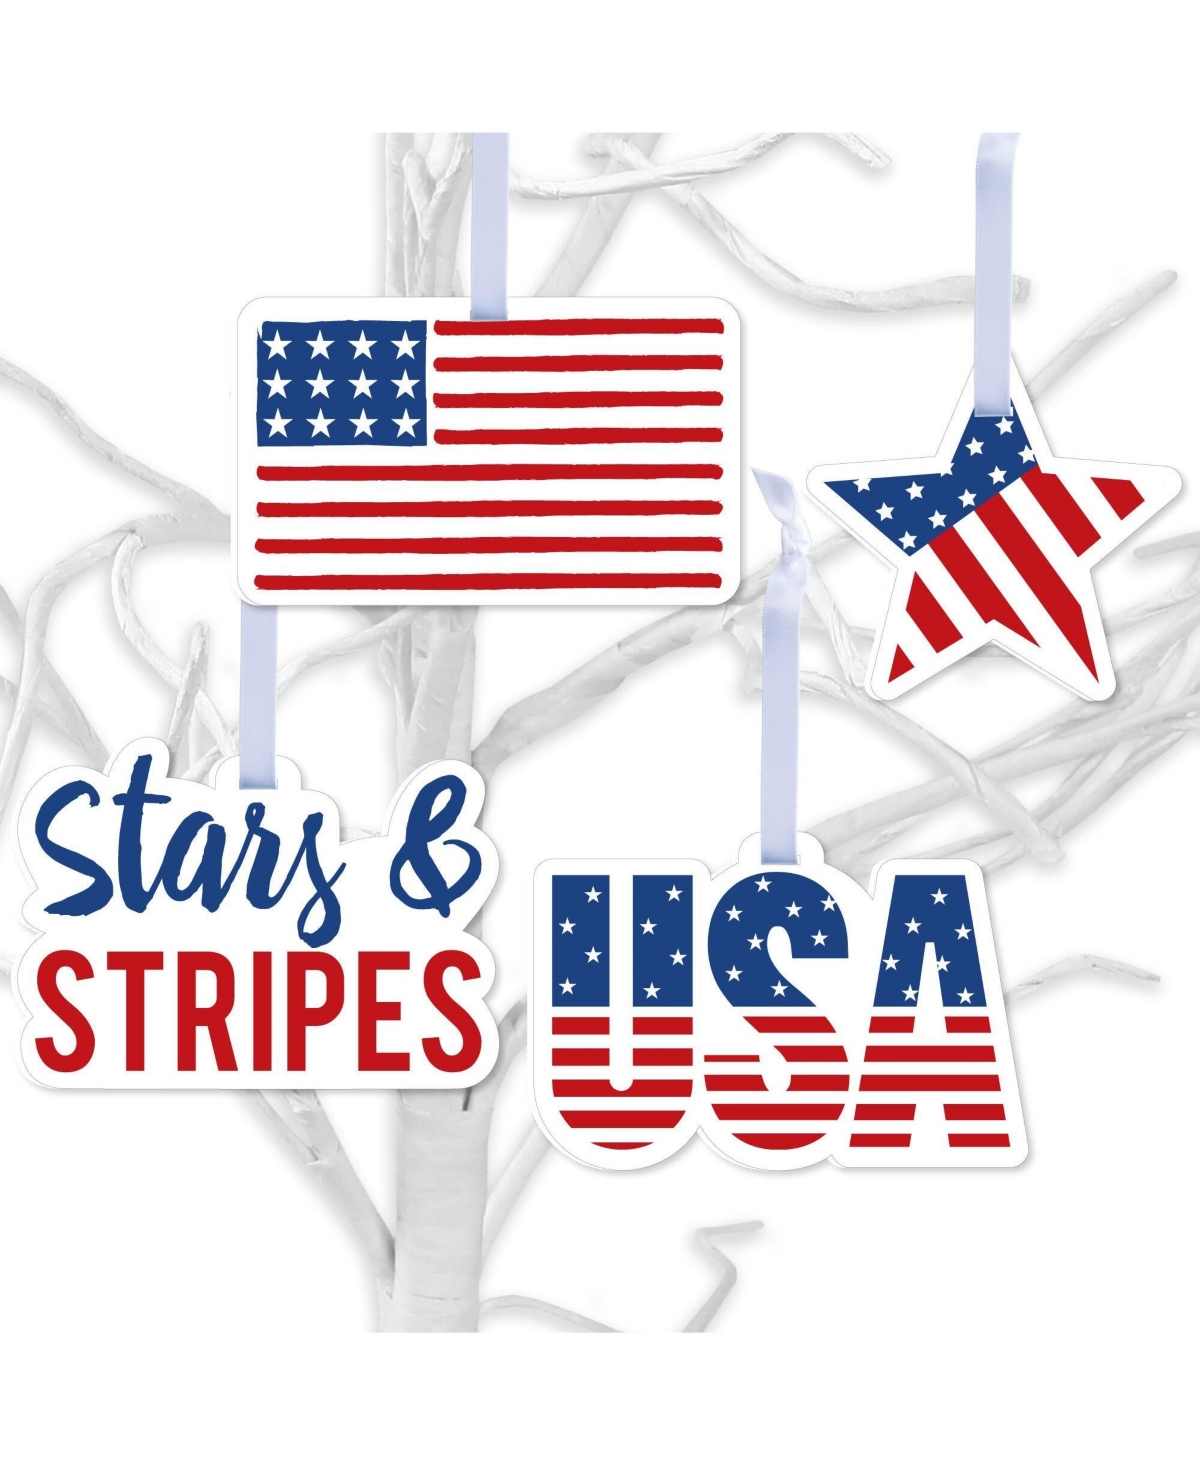 Stars & Stripes - Patriotic Decorations - Tree Ornaments - Set of 12